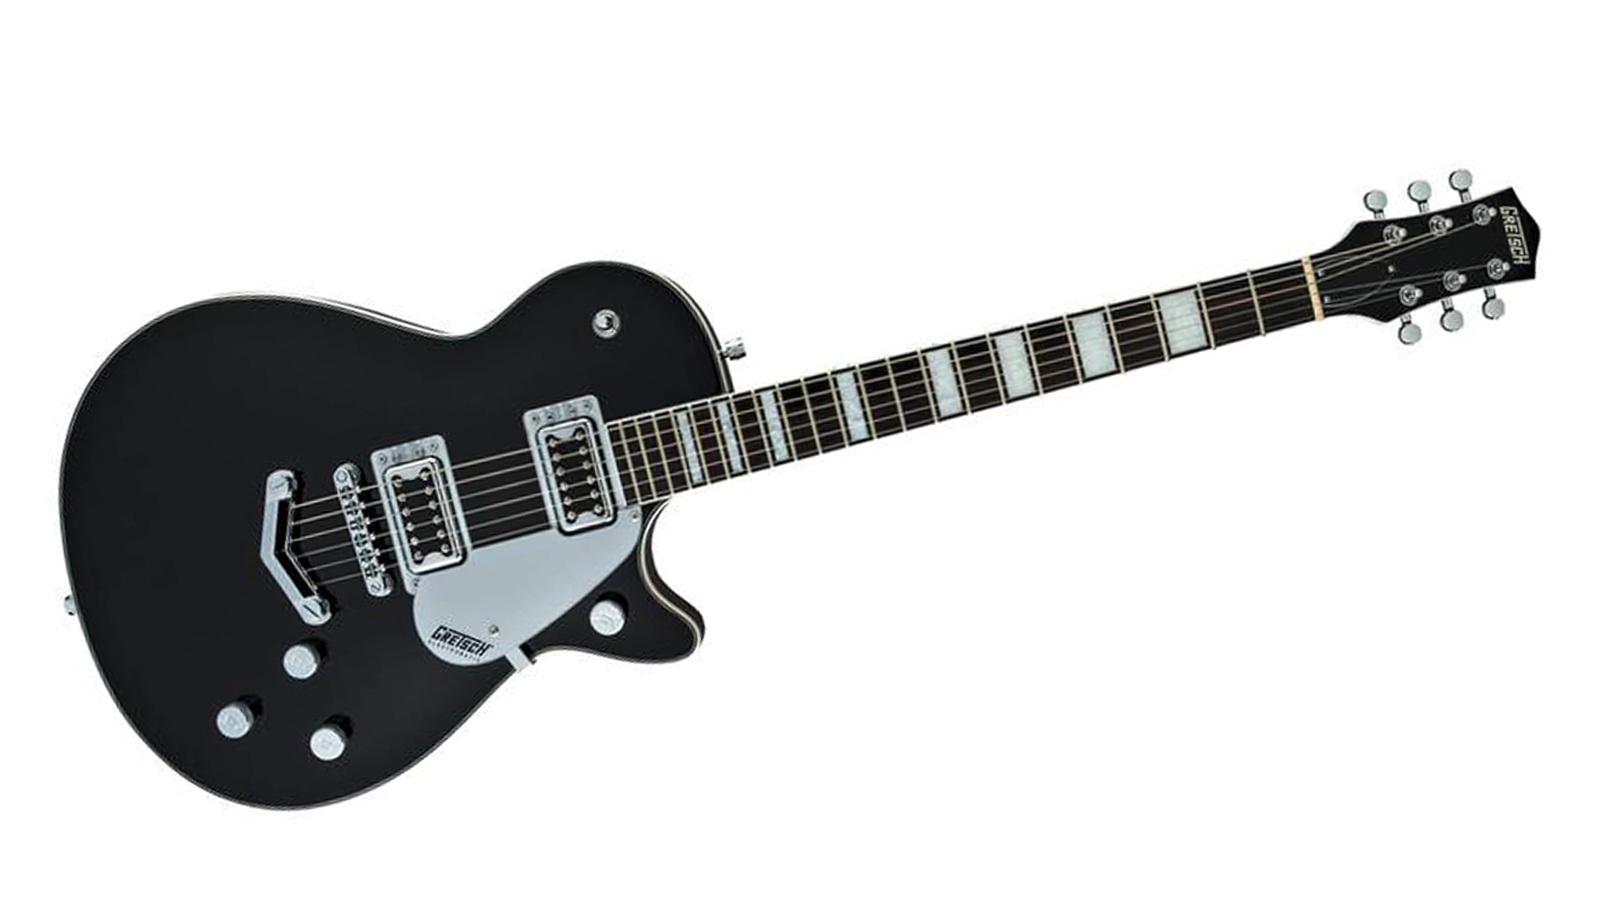 5 lighter alternatives to the Gibson Les Paul: Gretsch G5220 Electromatic Jet BT